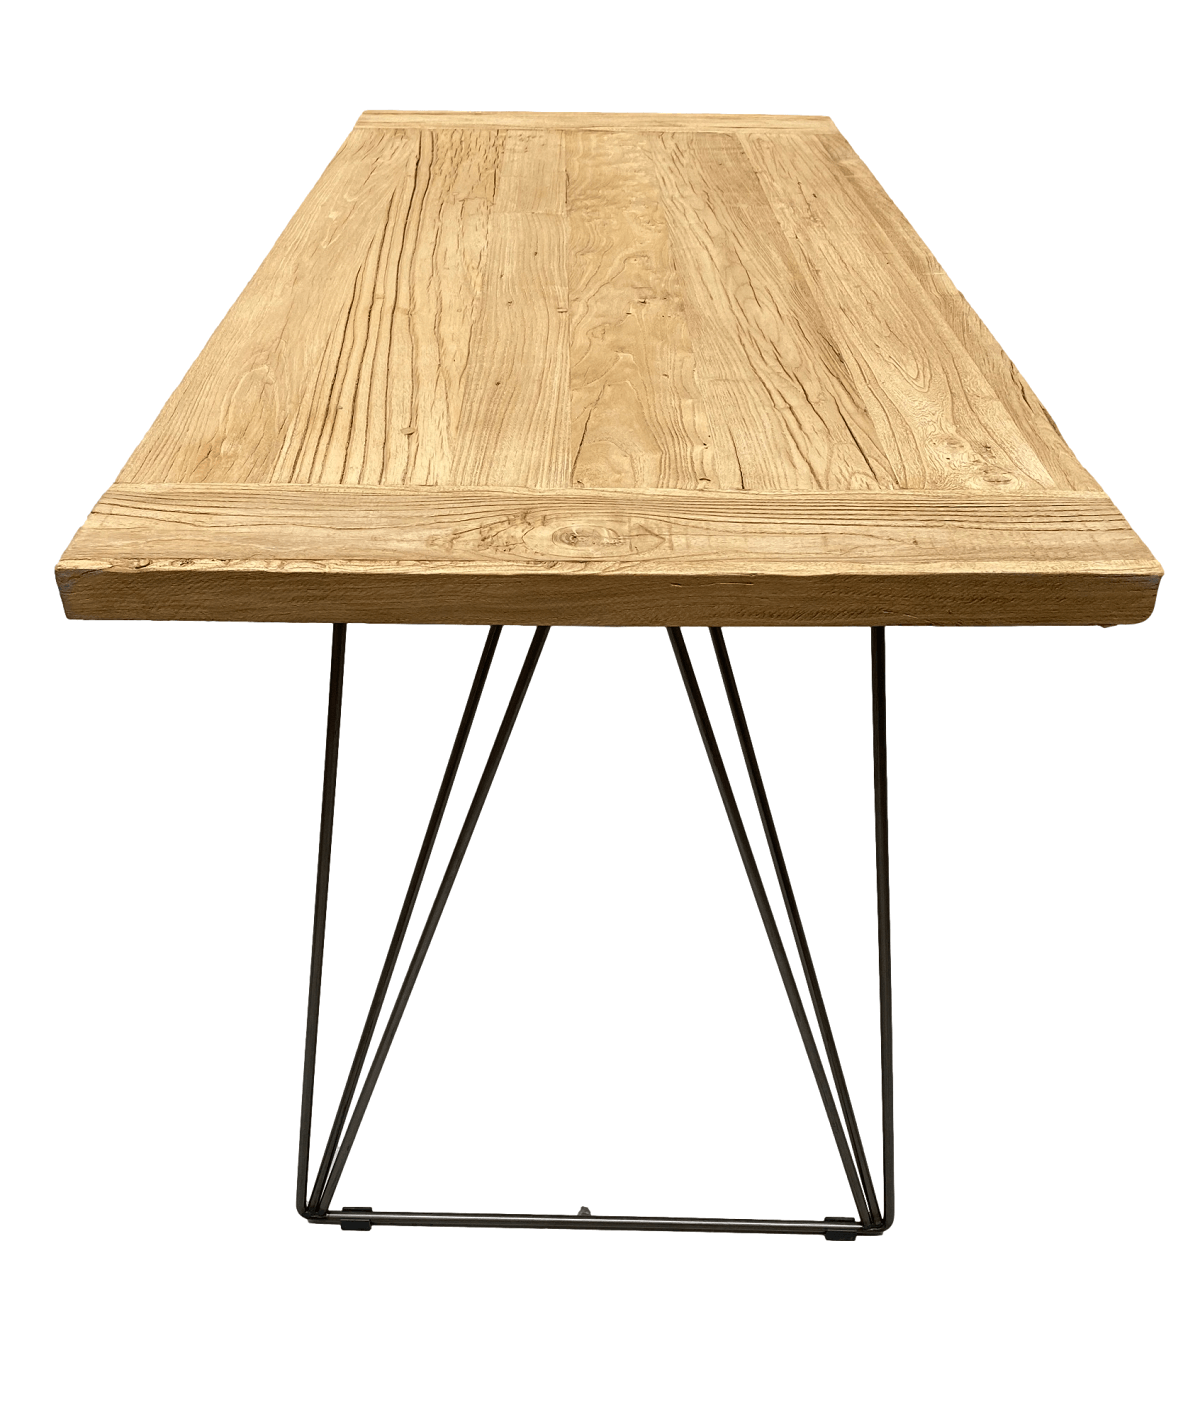 The 40mm Old Barn Reclaimed Elm Table / Desk - Wire Frame Legs